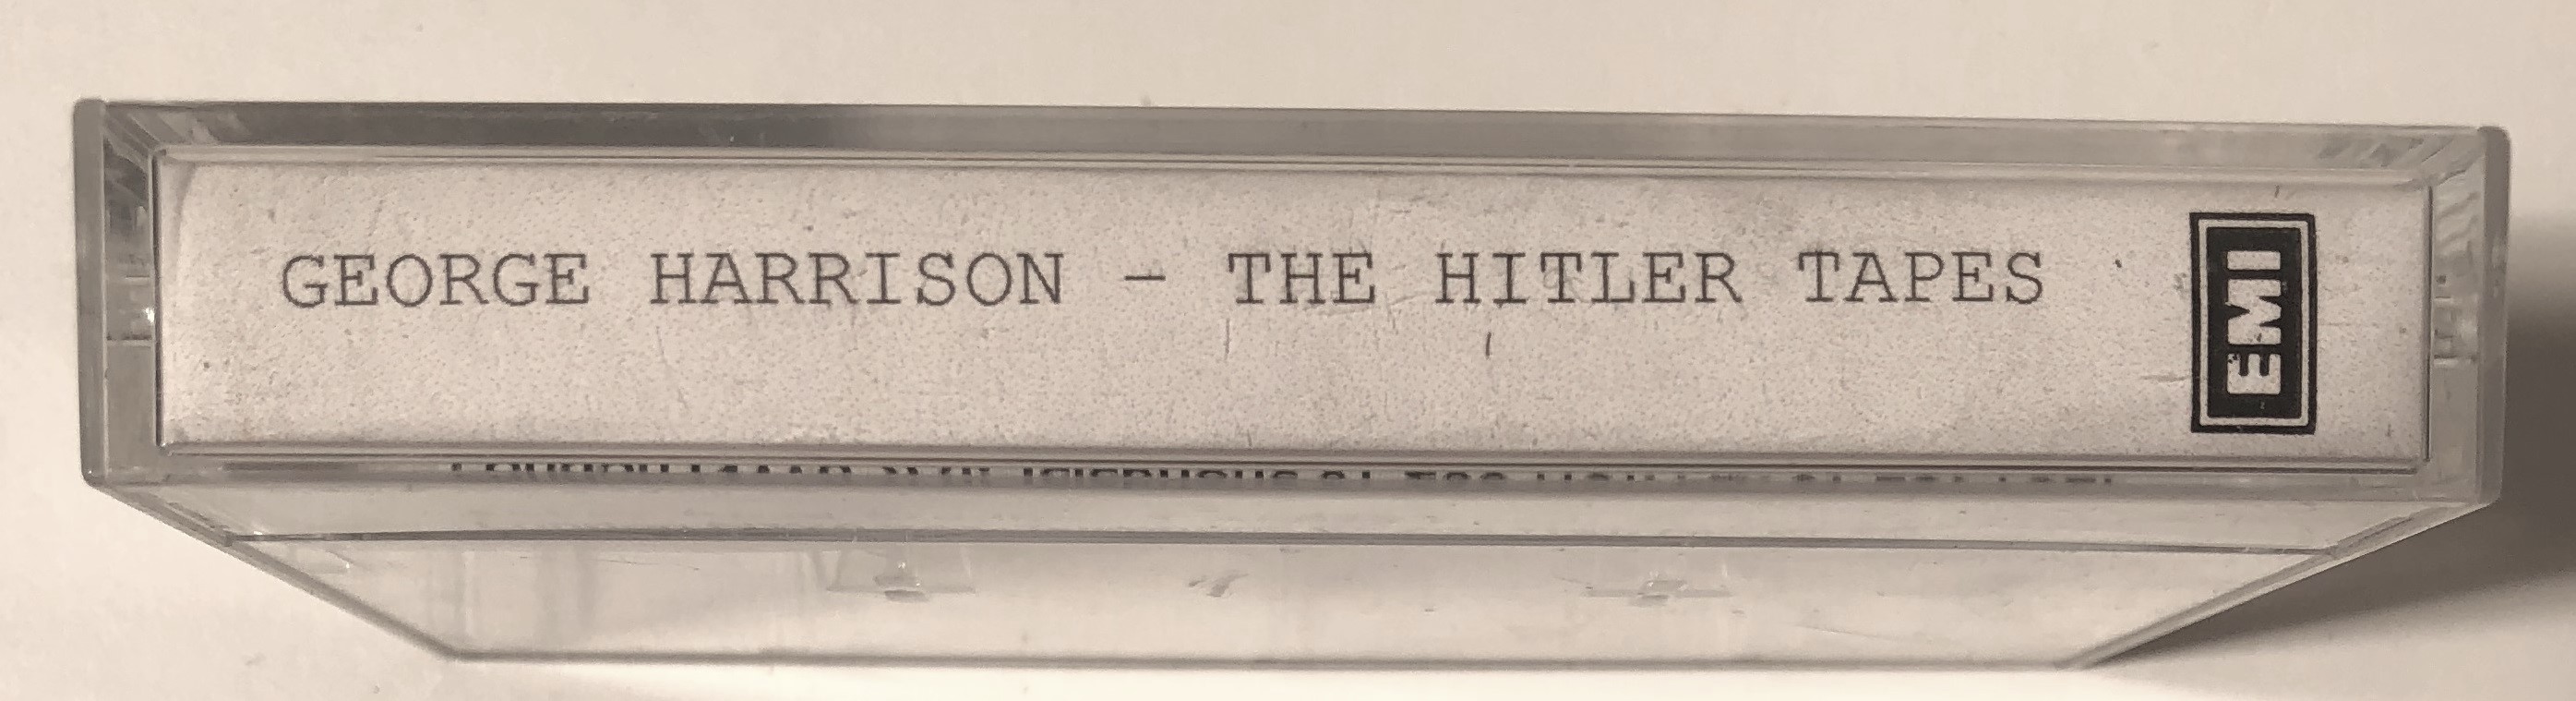 George Harrison's tape 